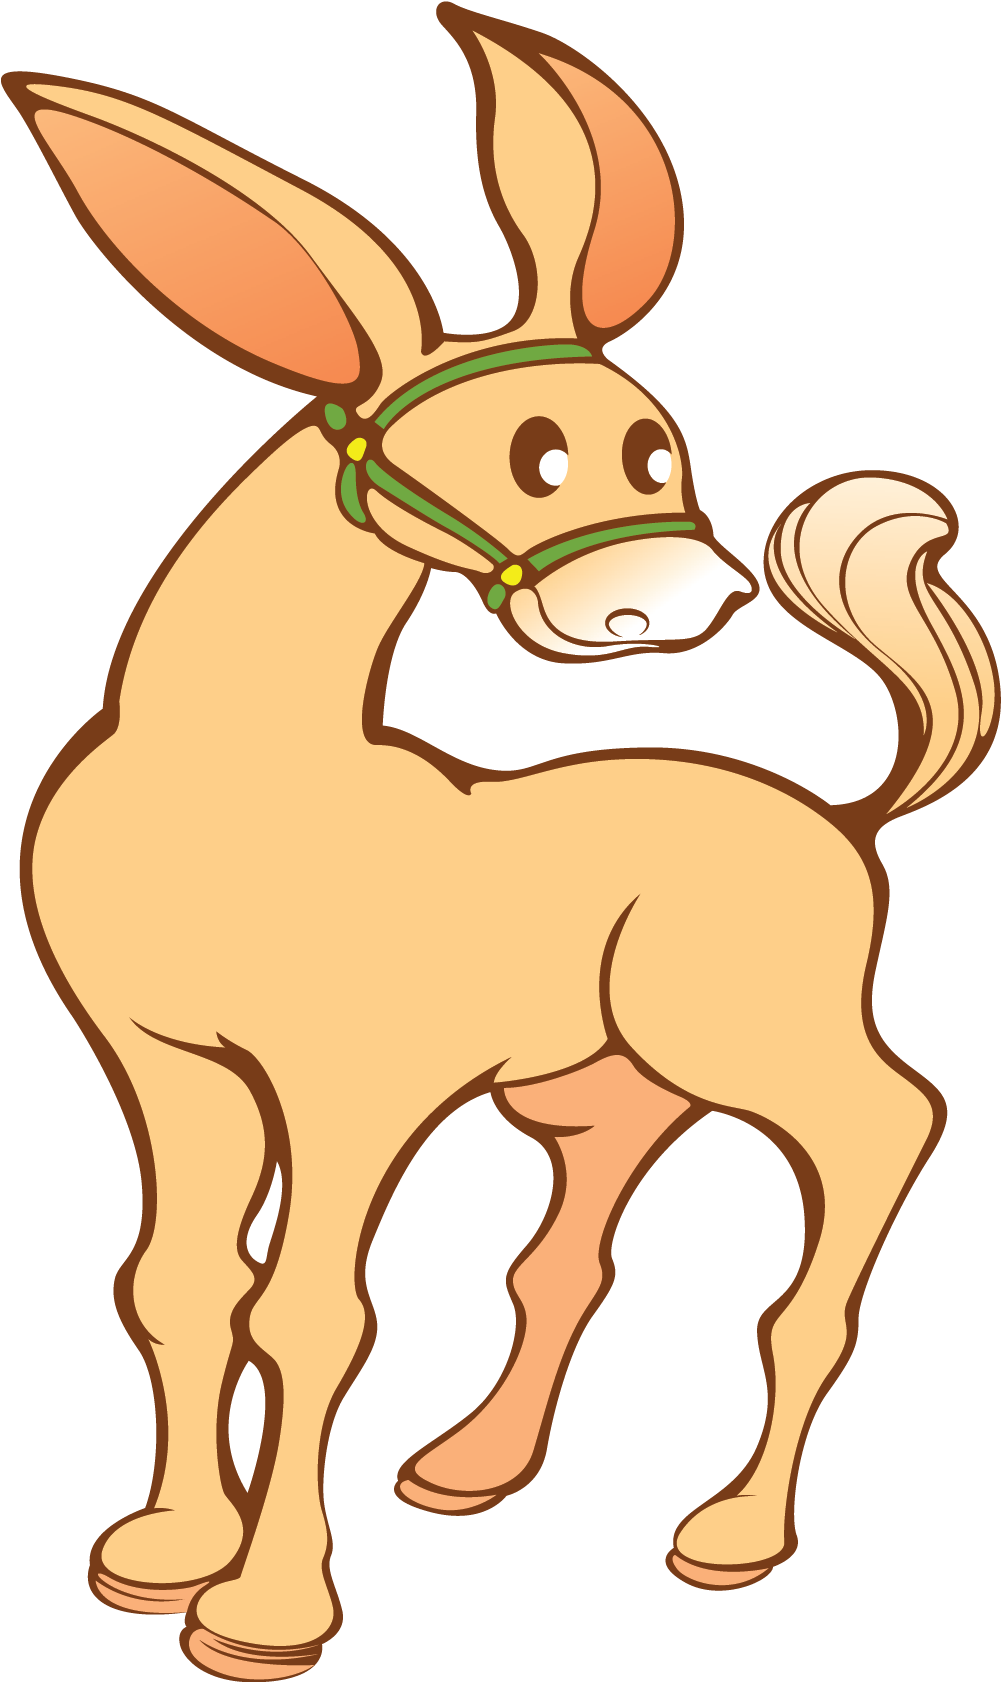 Horse Donkey Mule Cartoon Clip Art - Horse Donkey Mule Cartoon Clip Art (1108x1699)